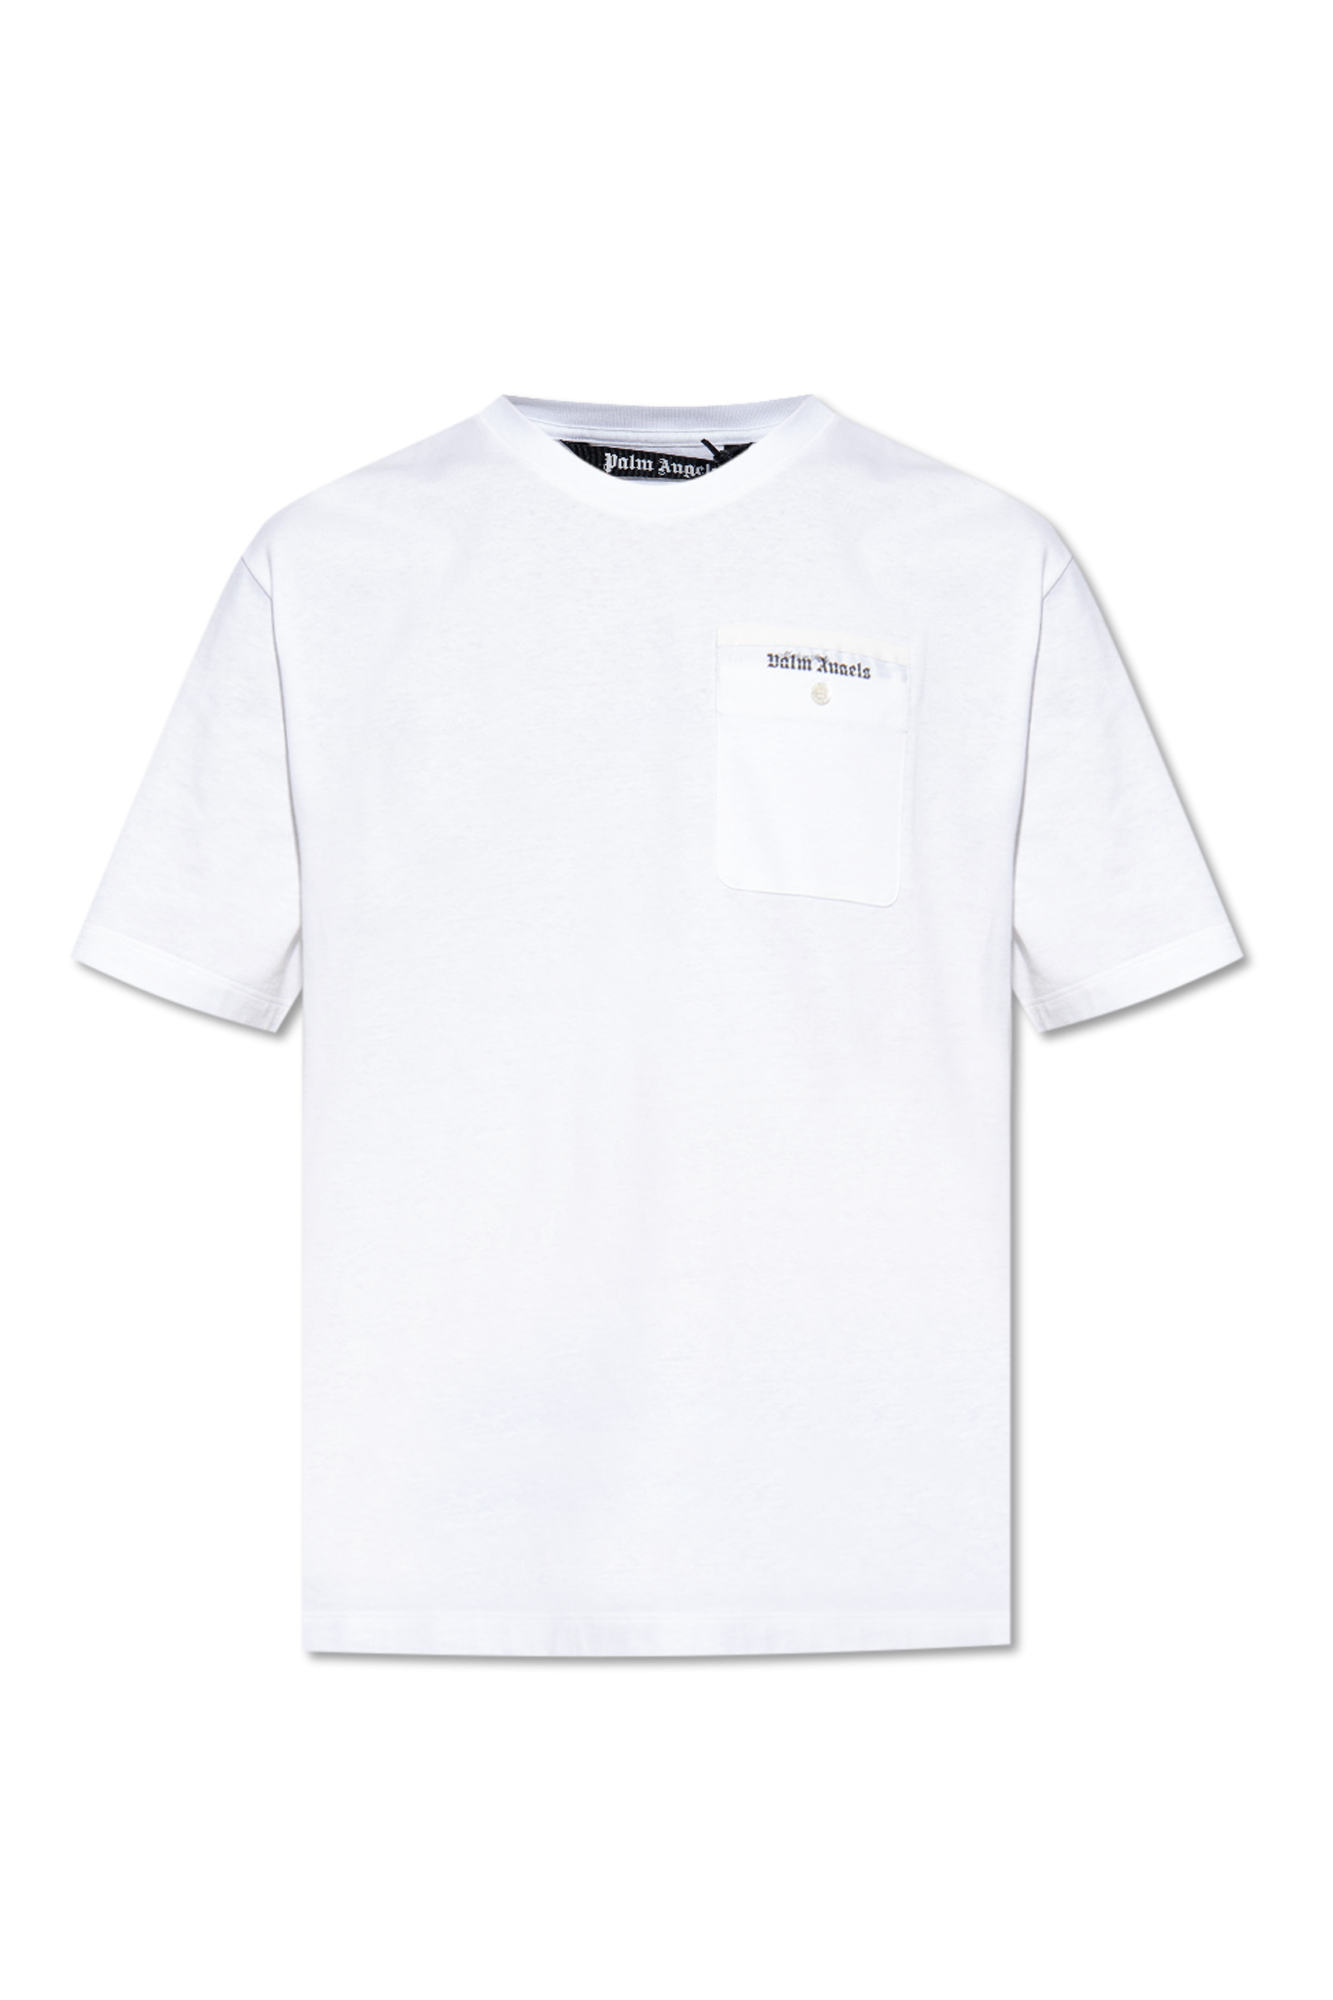 White T-shirt with logo Palm Angels - Vitkac Italy